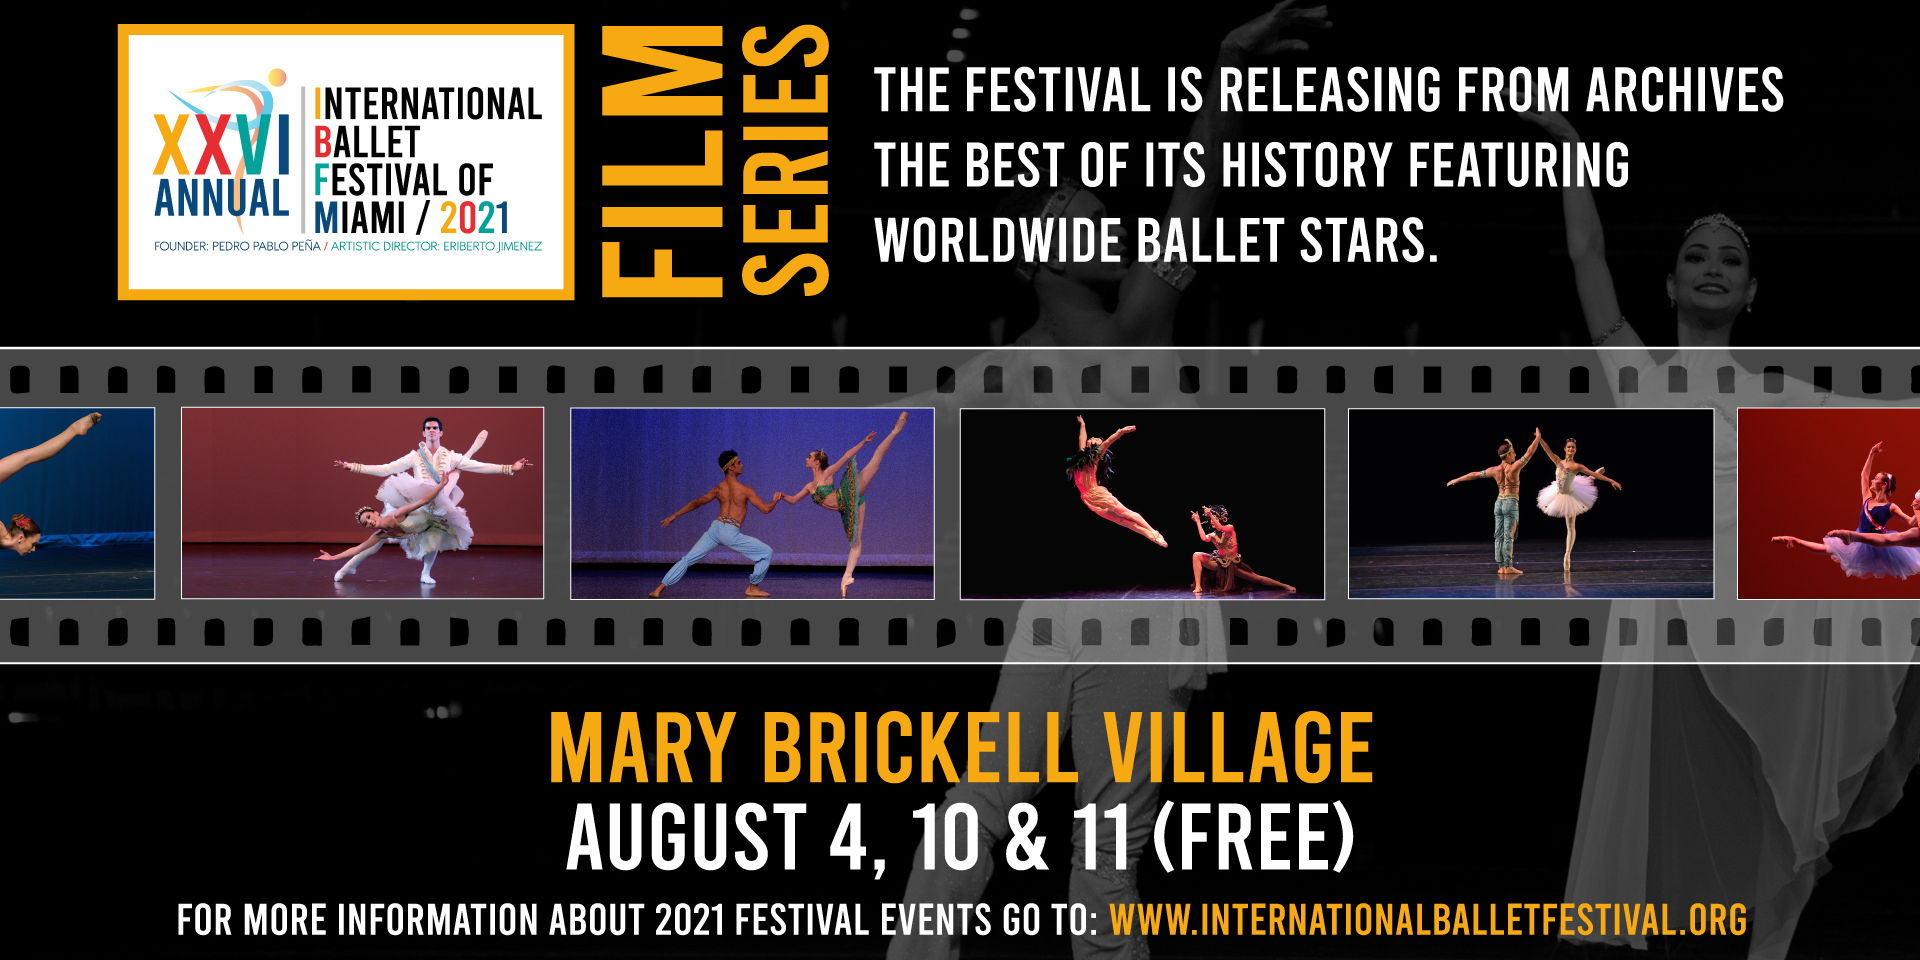 International Ballet Festival On the Streets promotional image